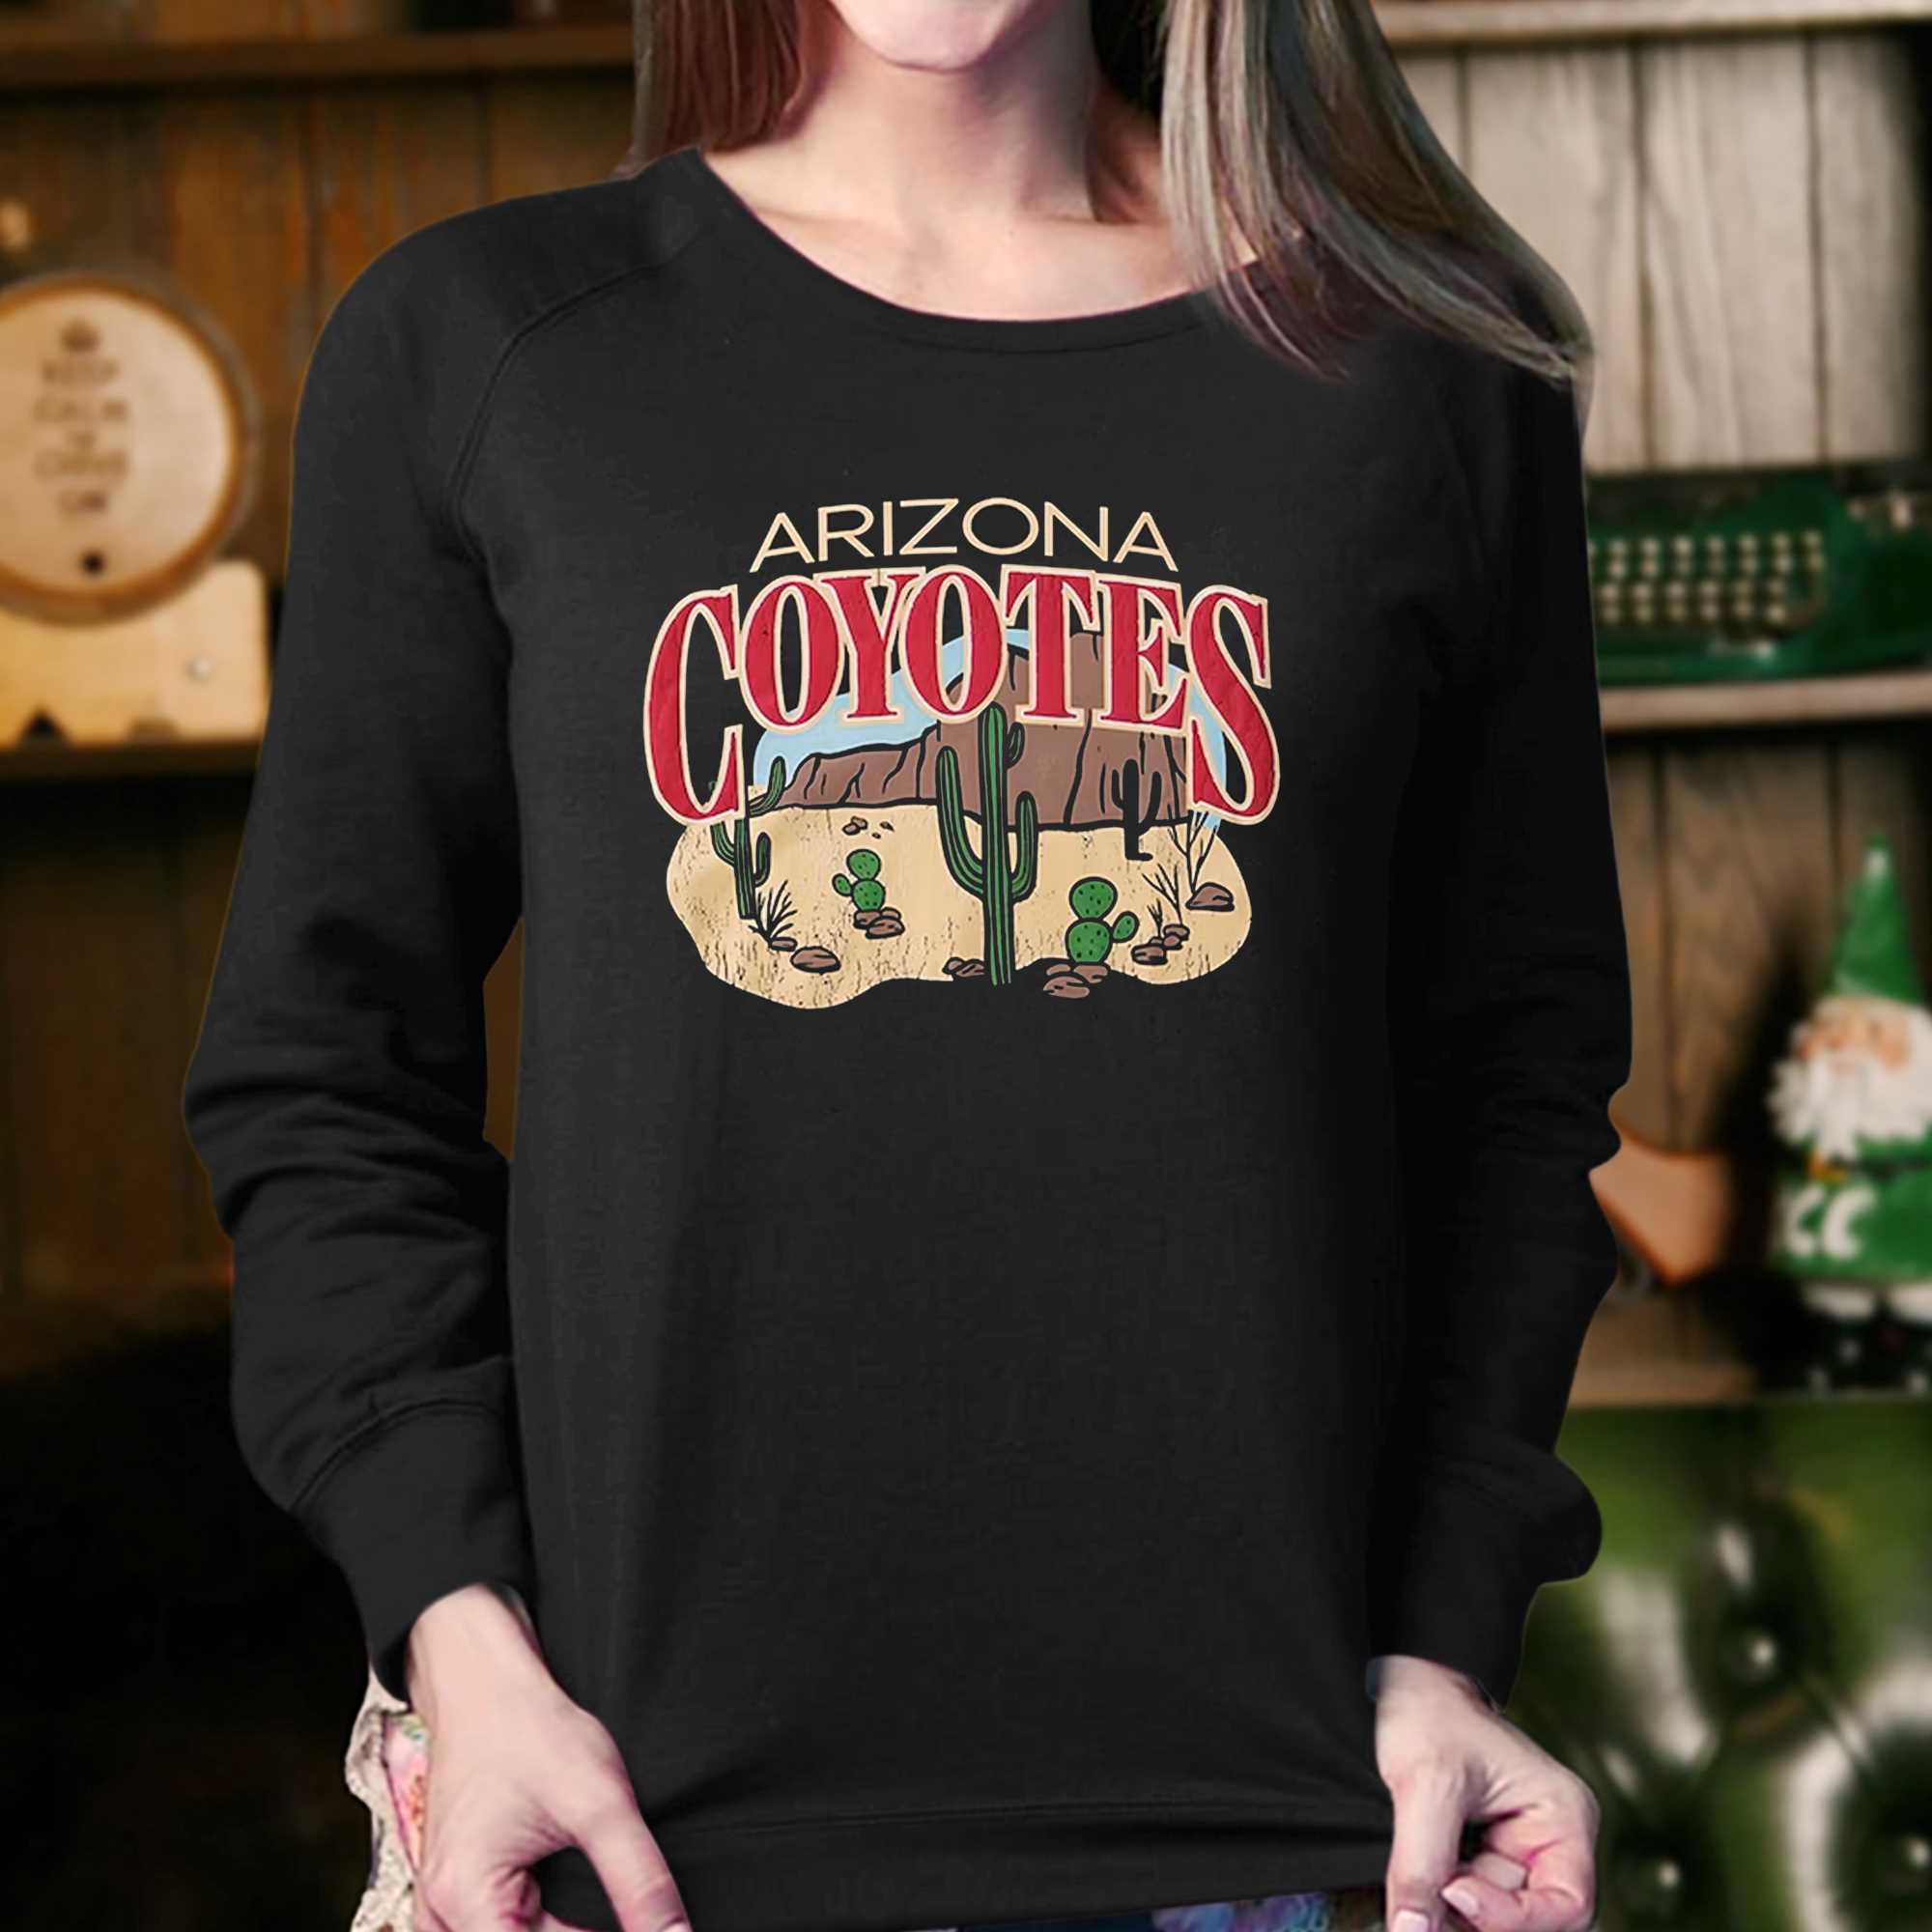  Arizona Coyotes Shirts